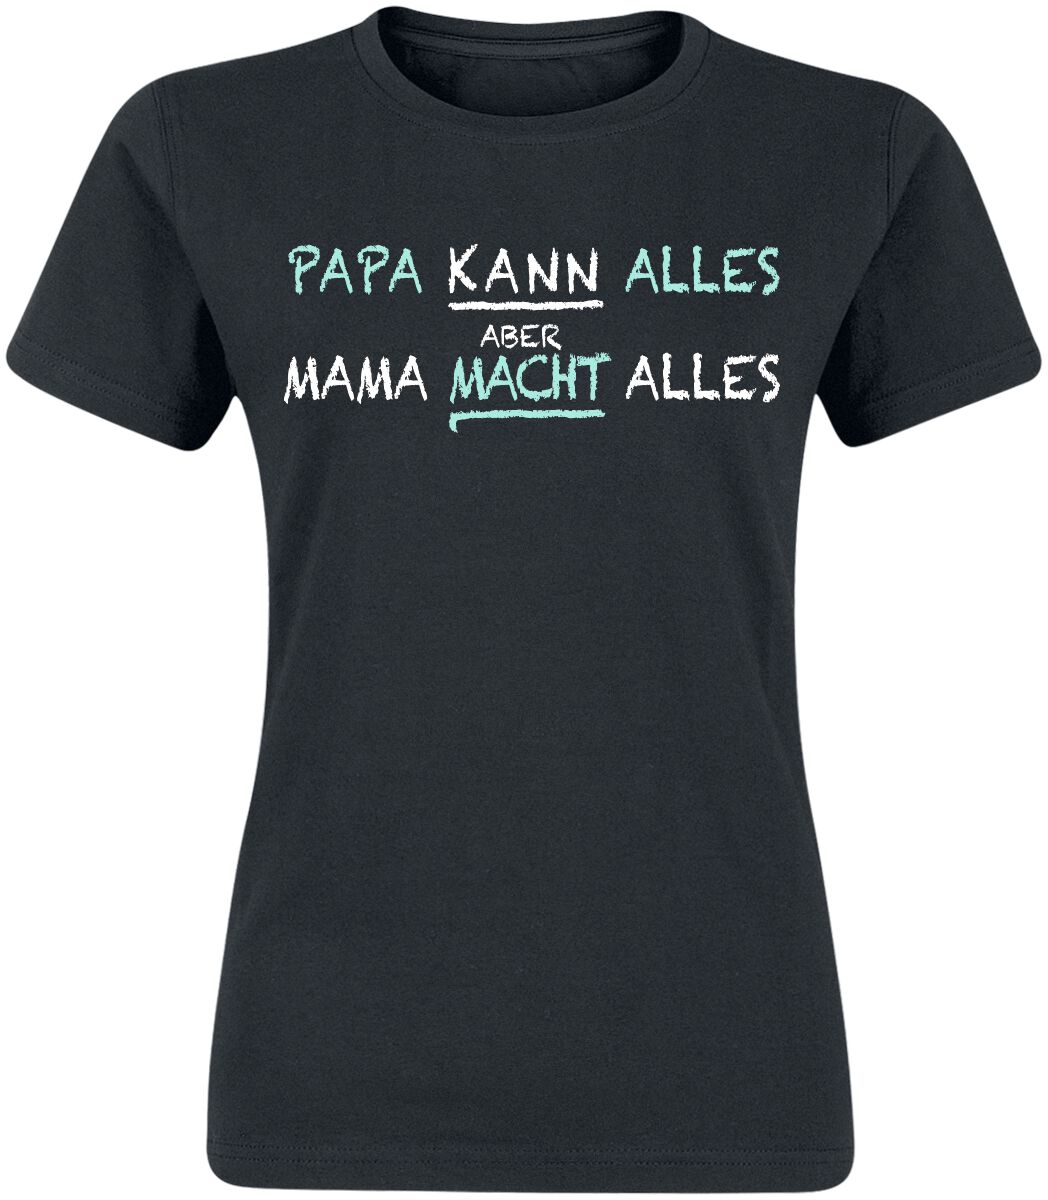 Familie & Freunde Mama macht alles T-Shirt schwarz in S